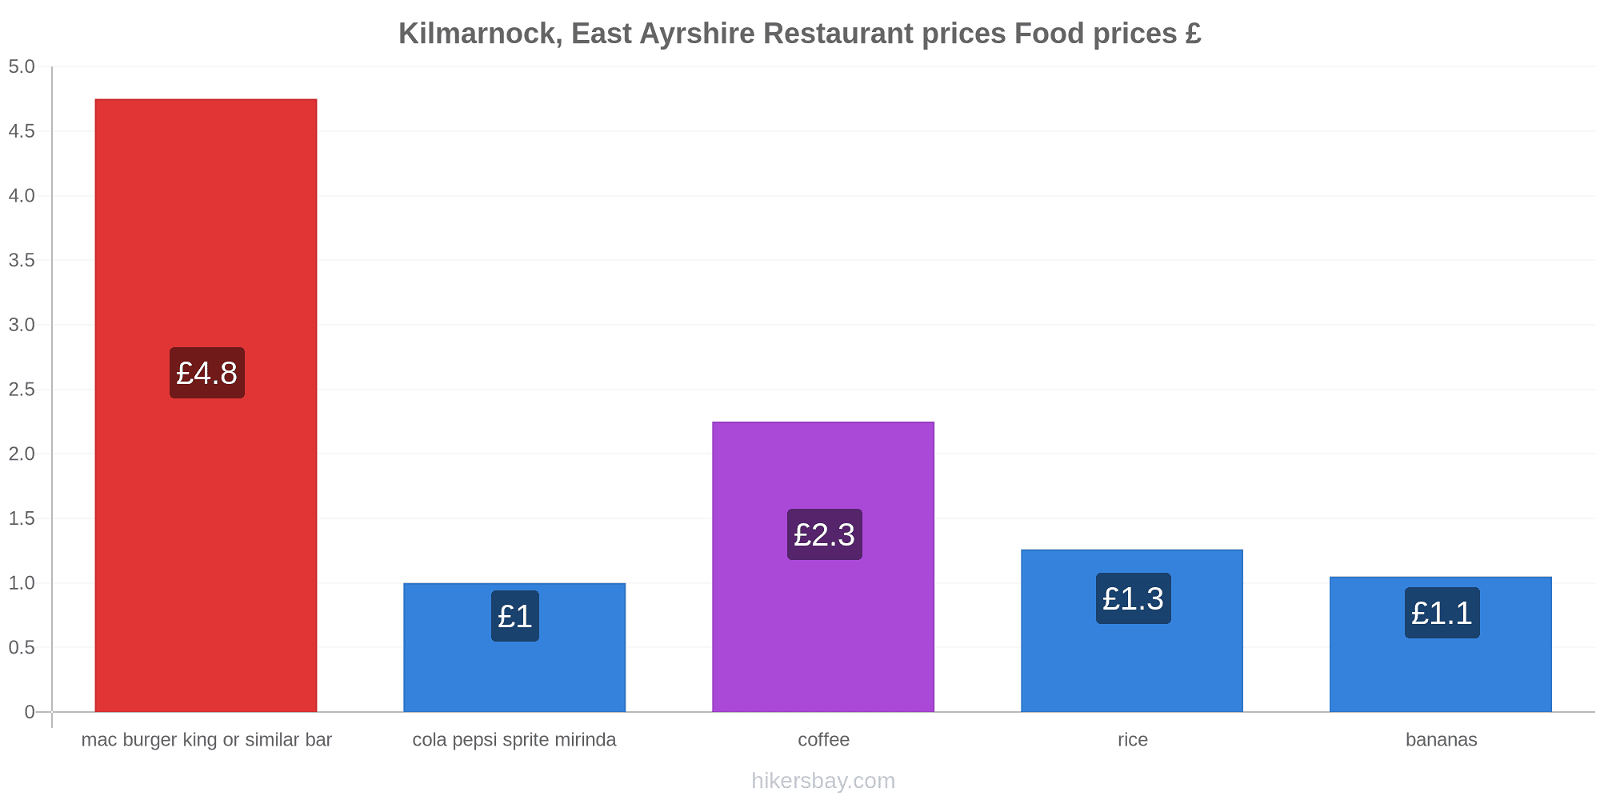 Kilmarnock, East Ayrshire price changes hikersbay.com